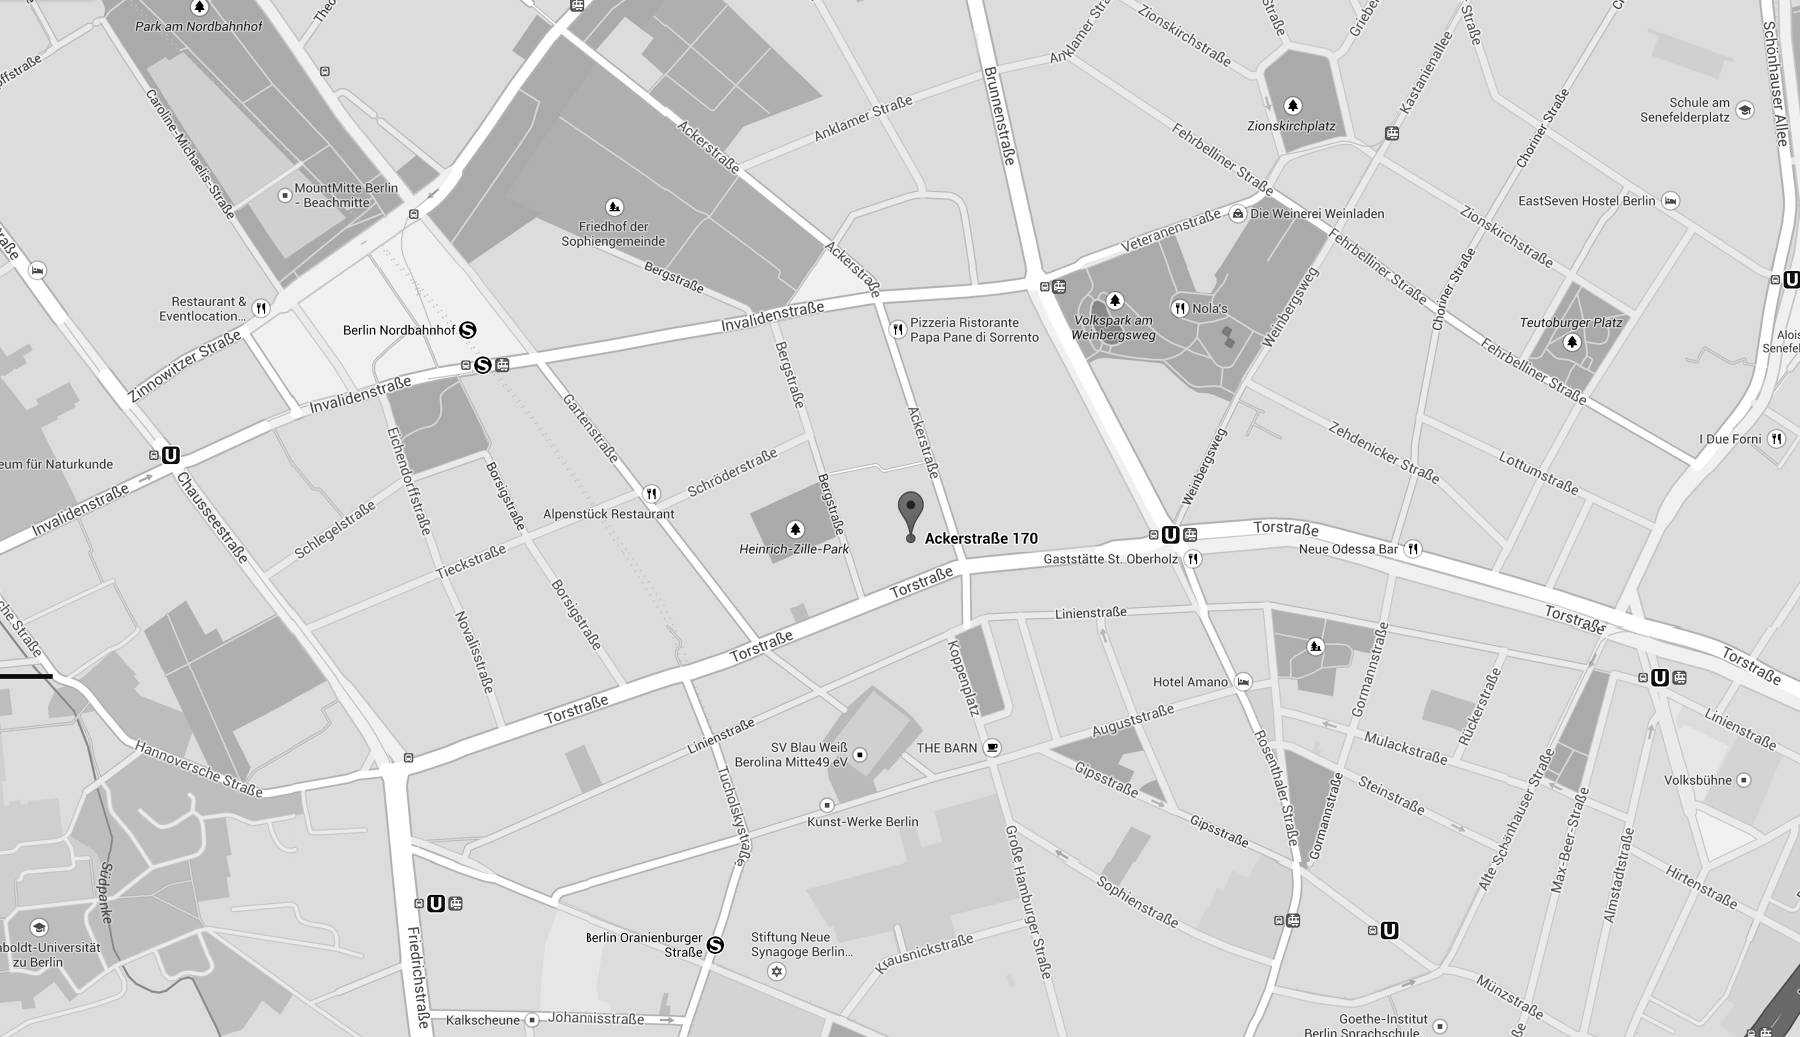 Acker Stadt Palast google maps